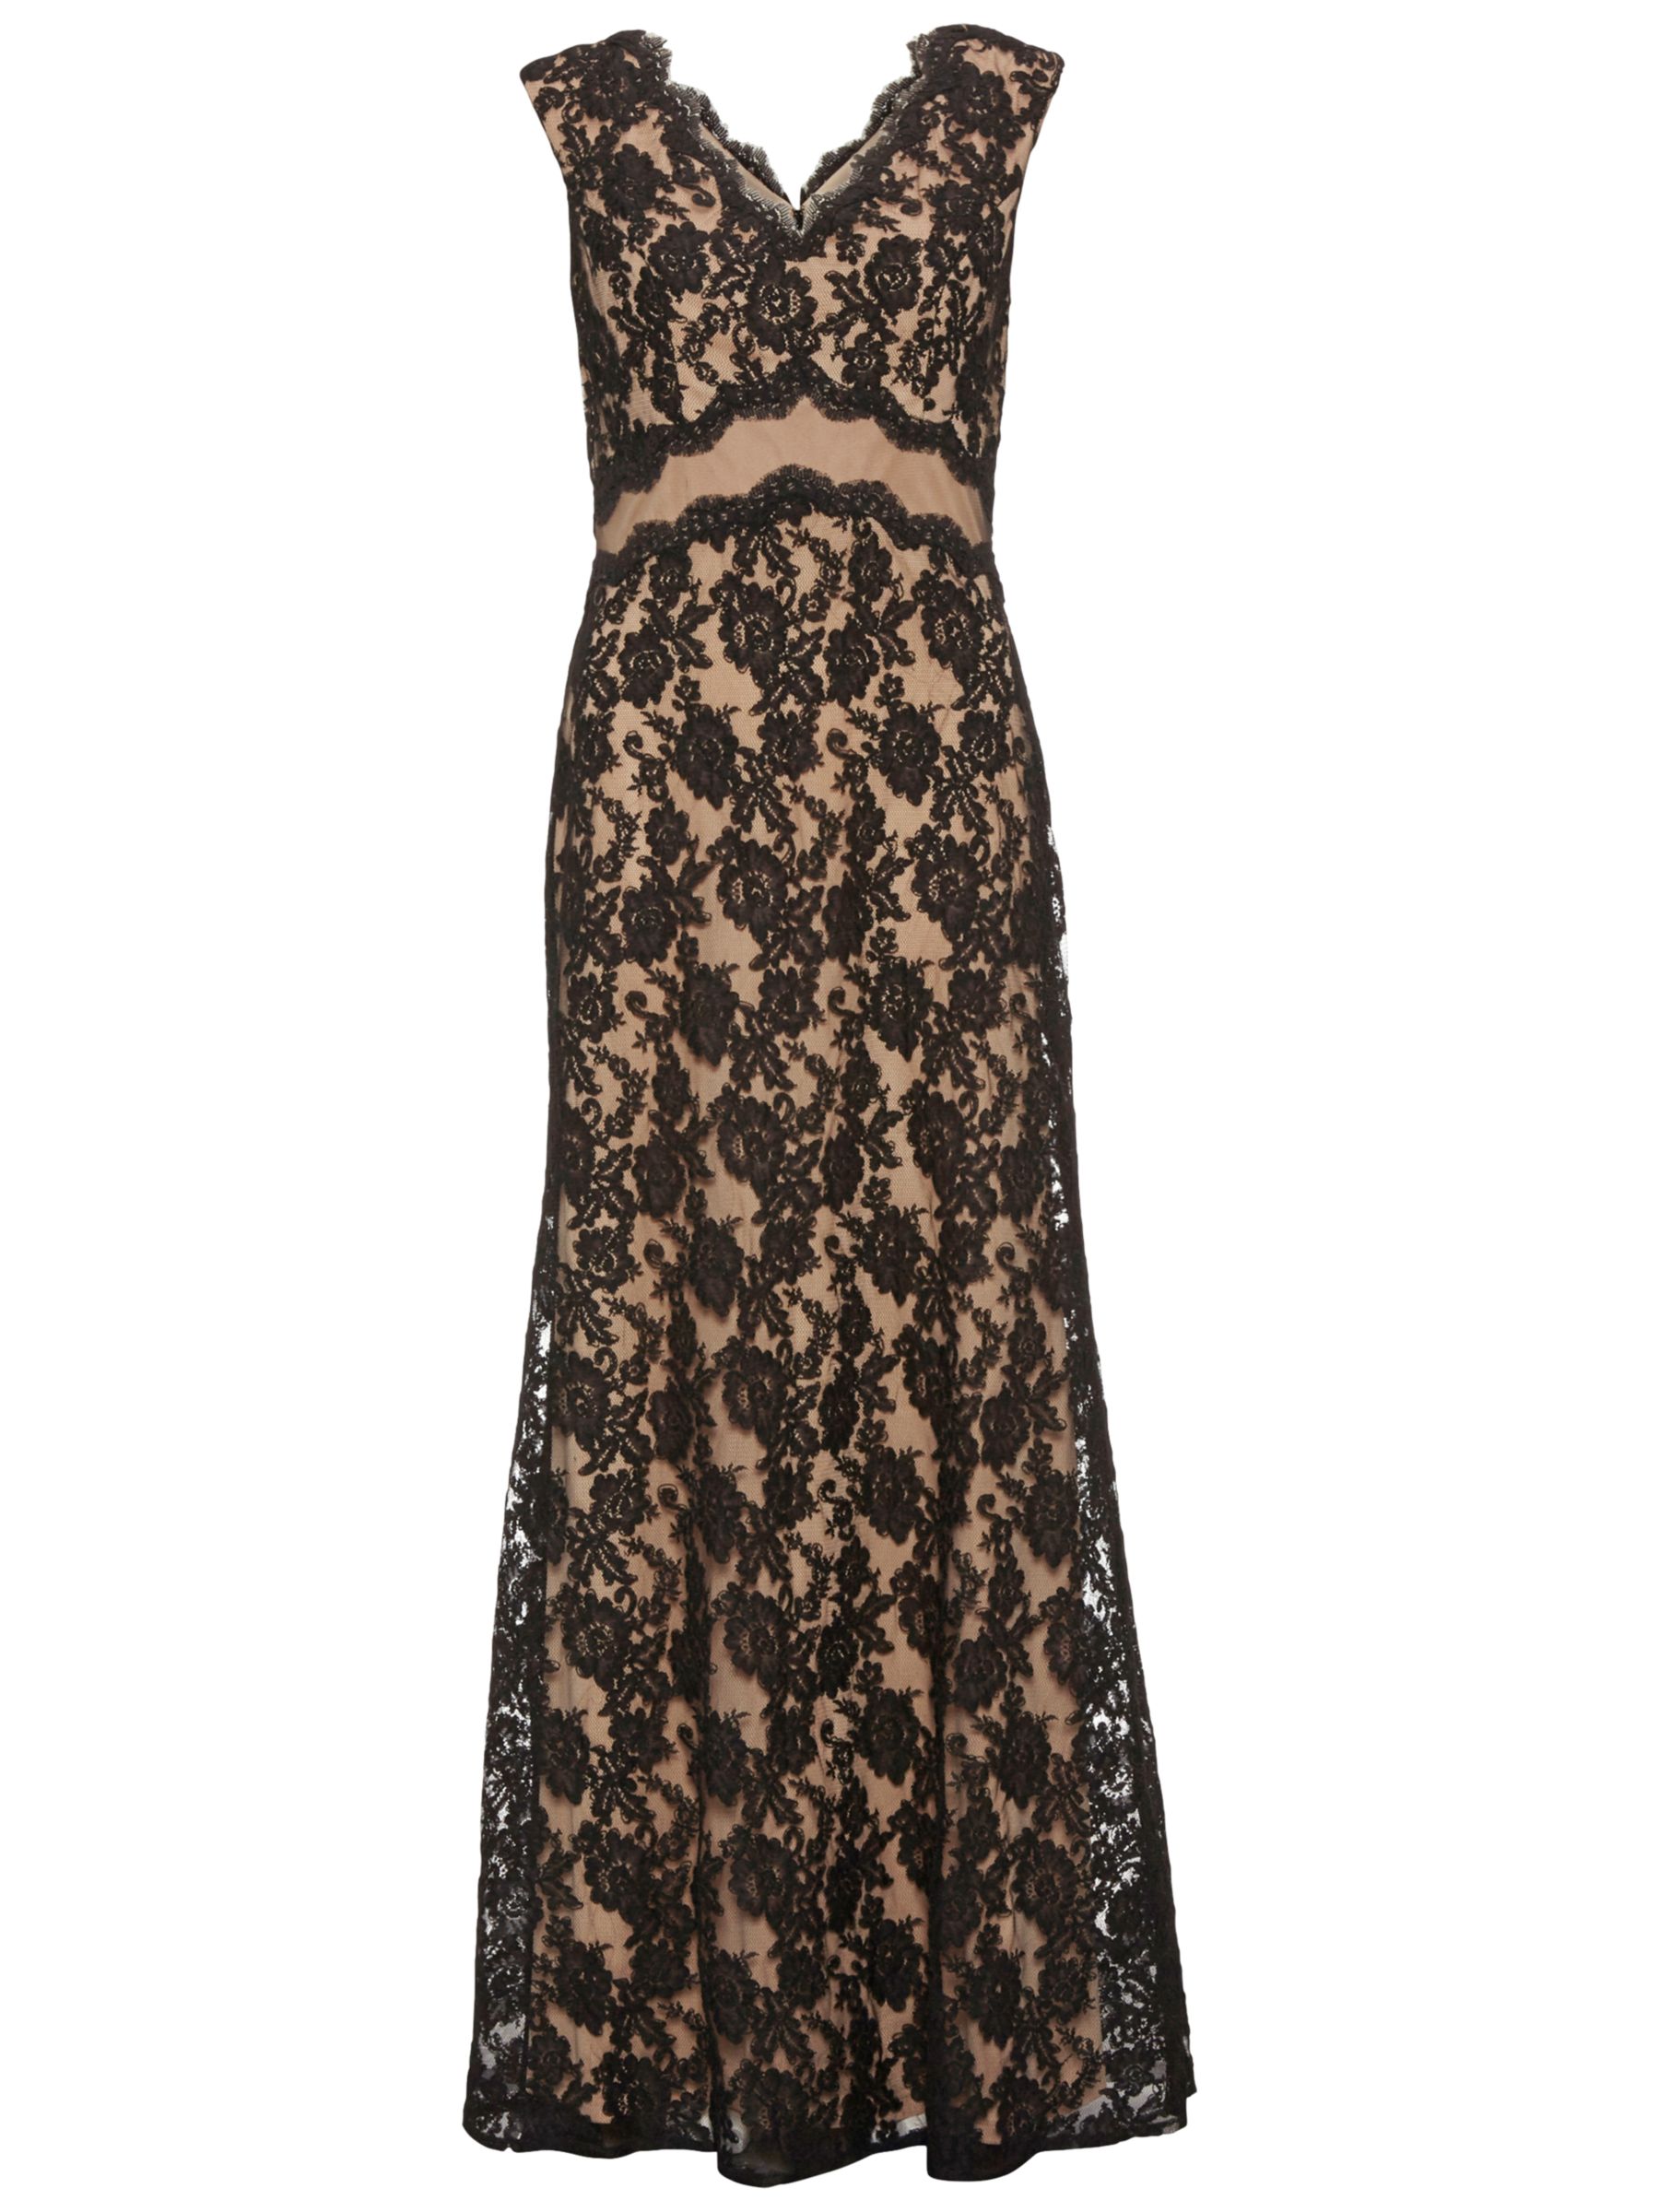 Gina Bacconi Lace Maxi Dress, Black/Beige